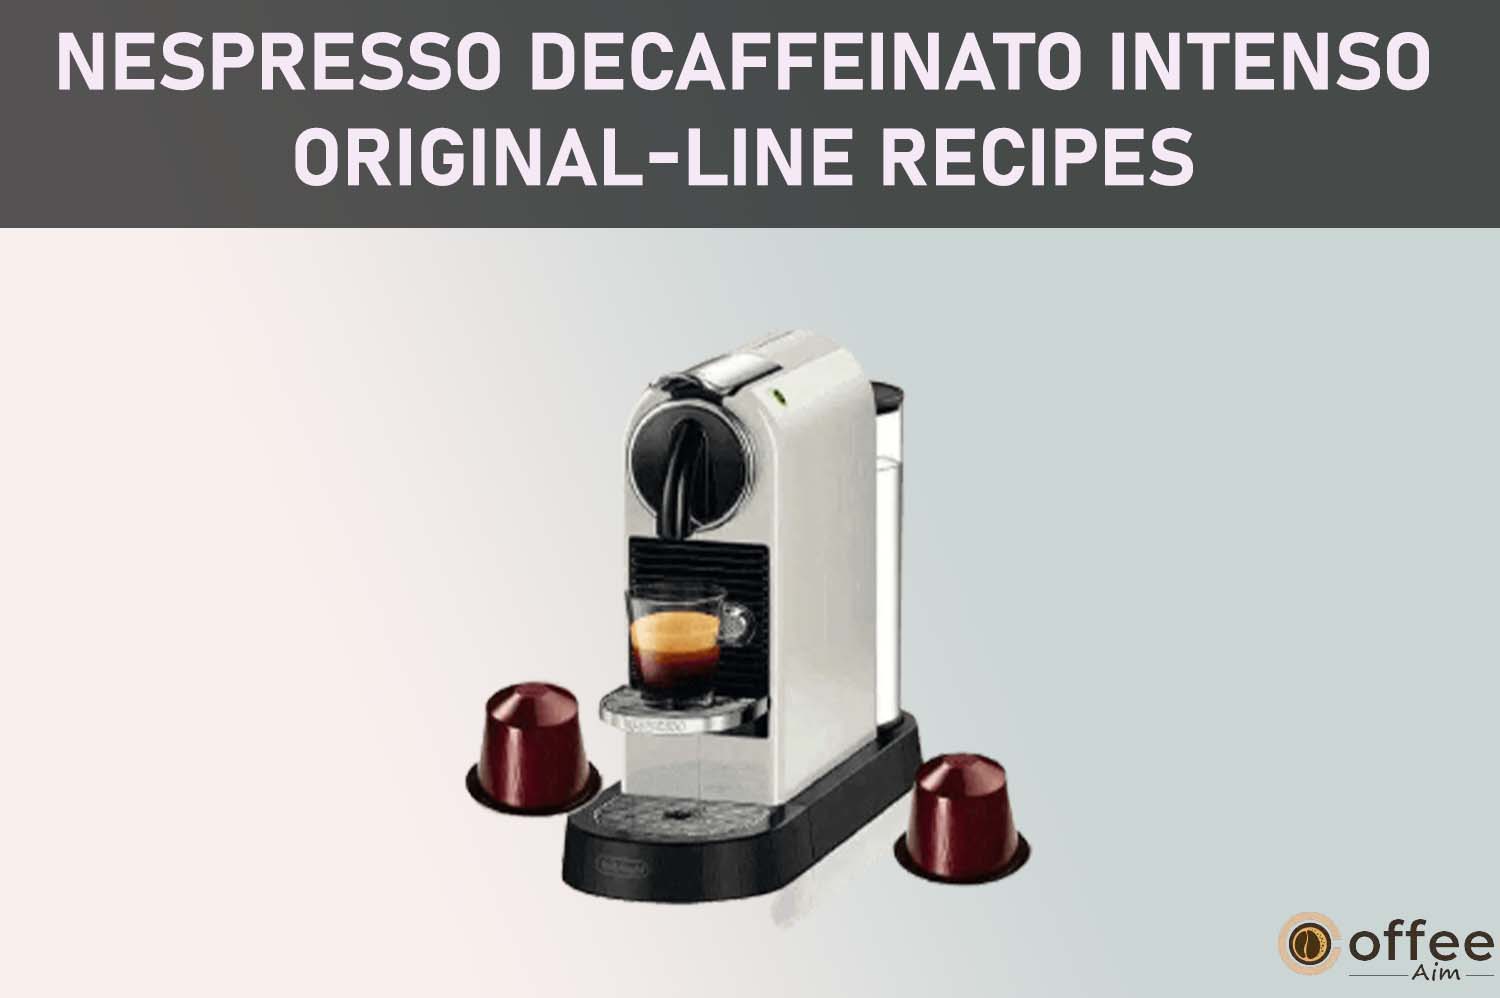 Featured image for the article "Nespresso Decaffeinato Intenso Original-Line Recipes"